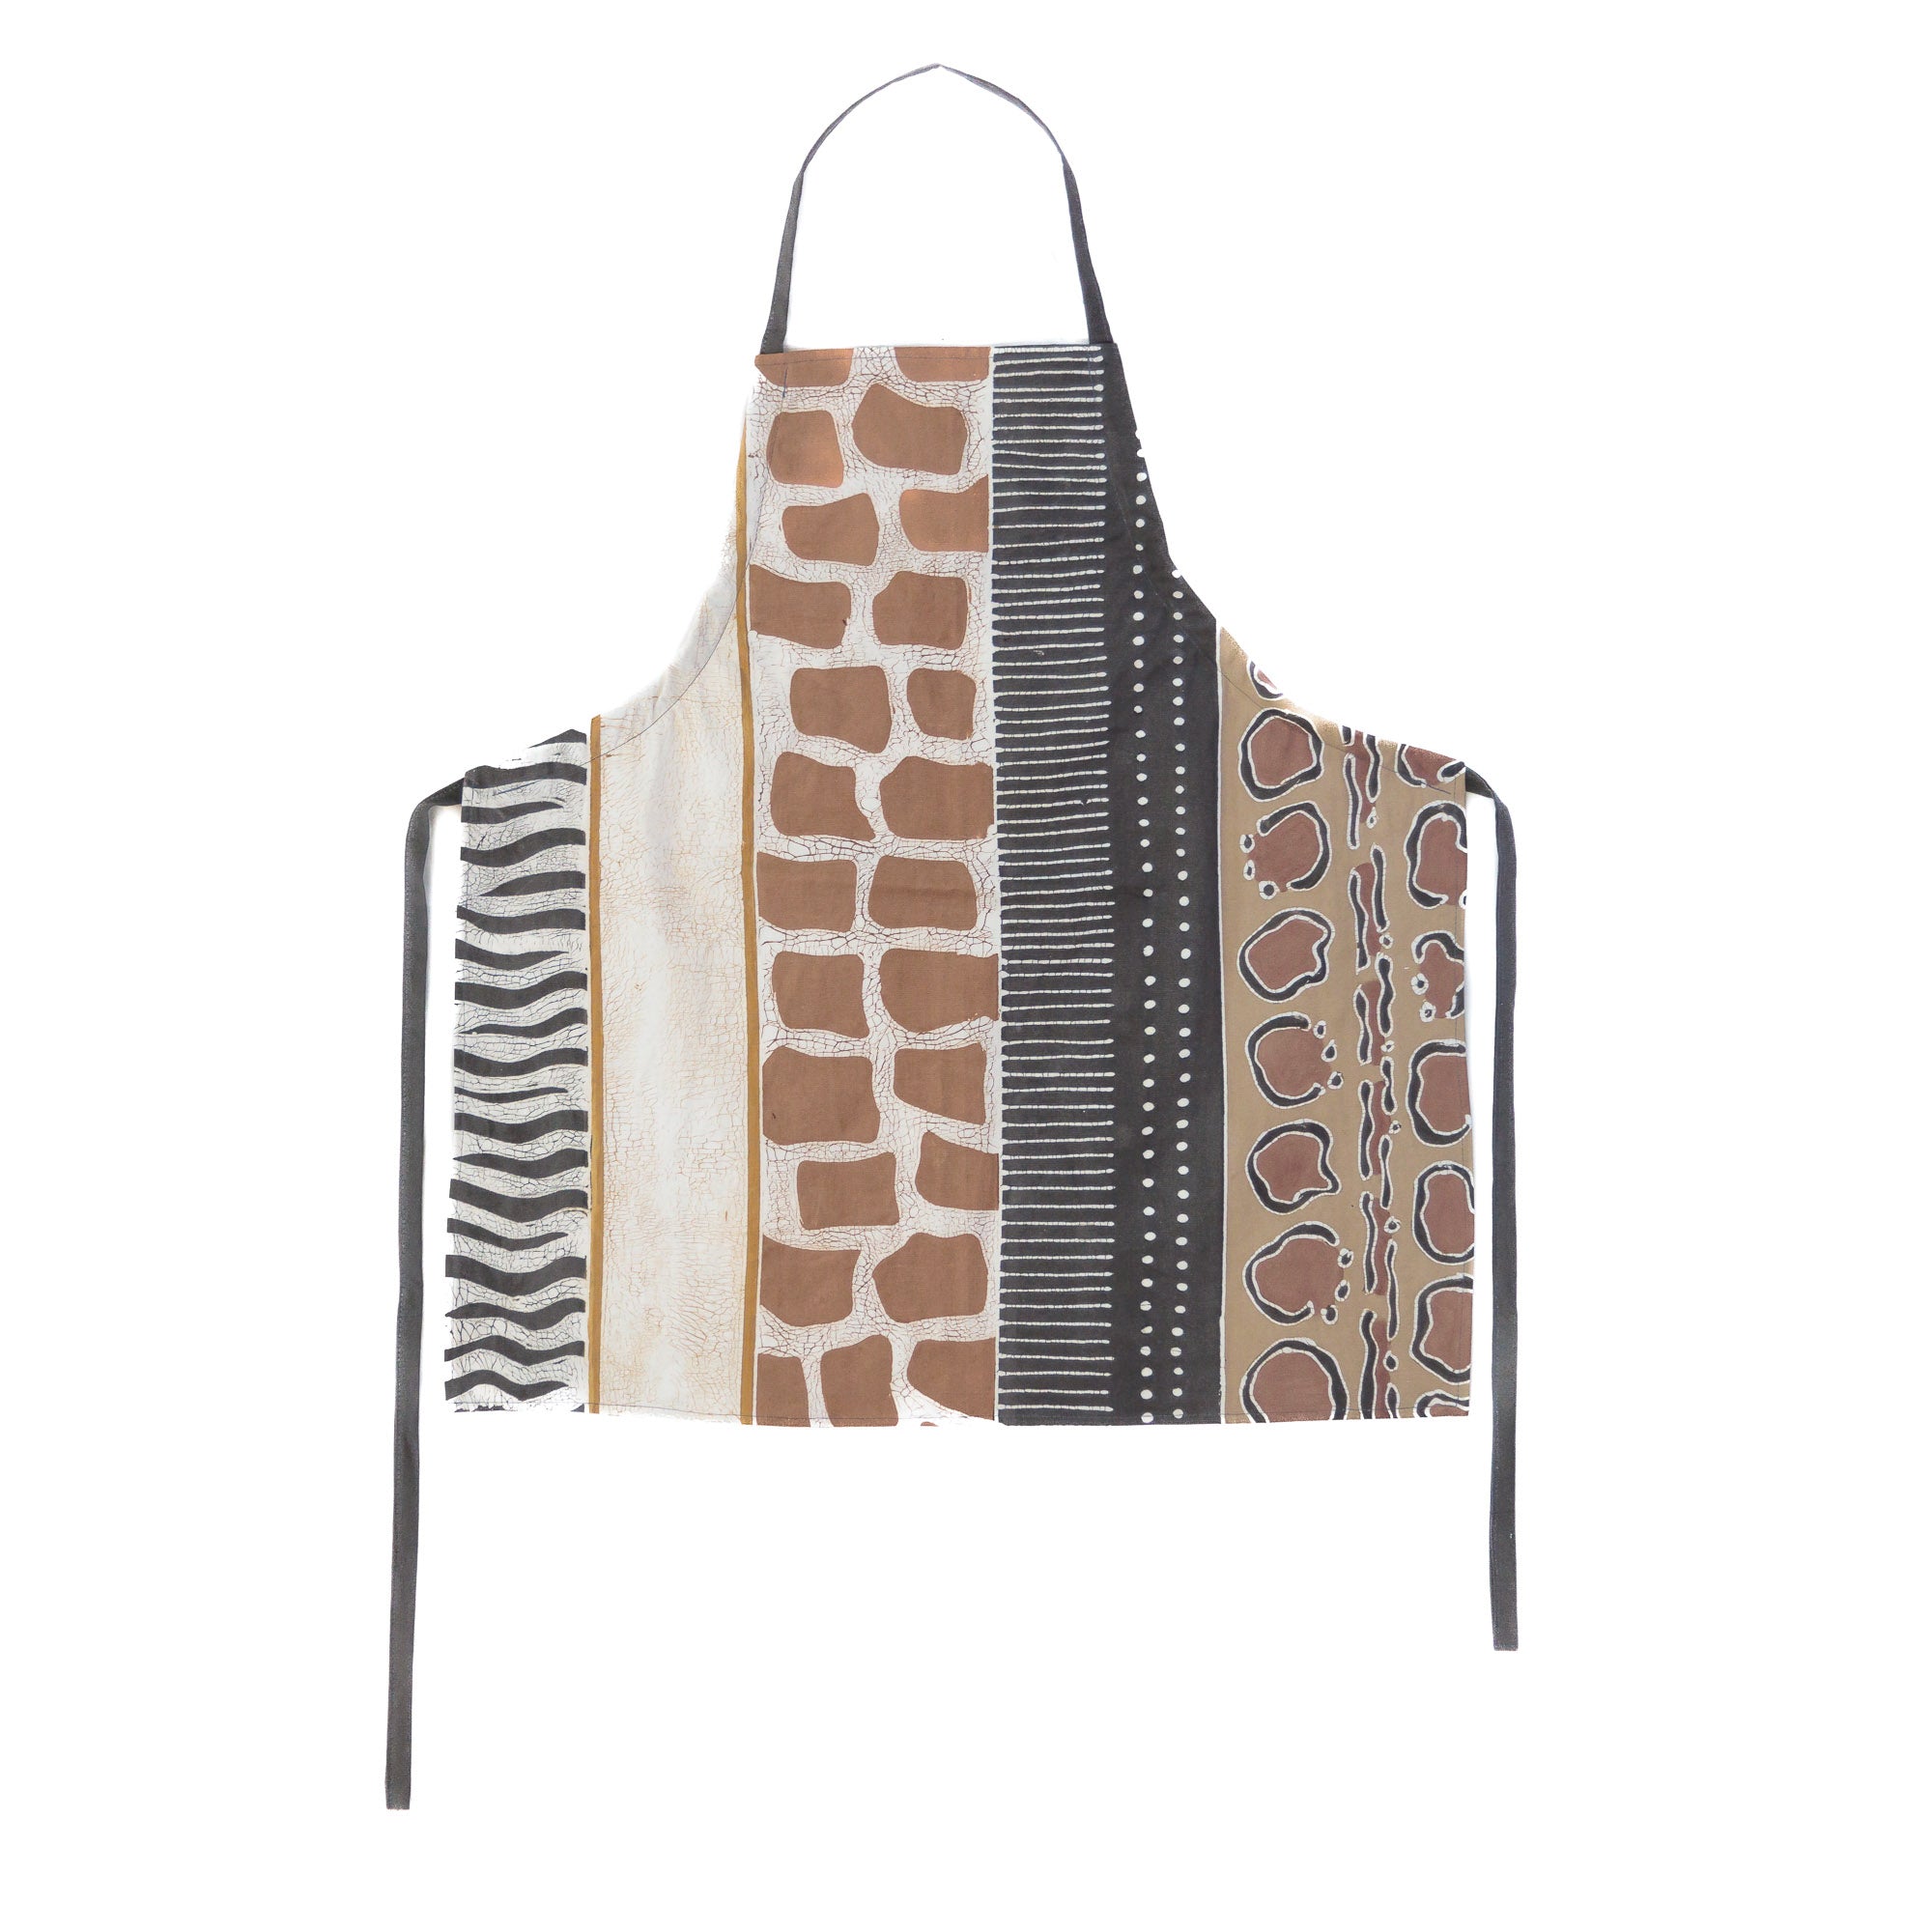 Adjustable multiprint animal pattern apron for your kitchen.